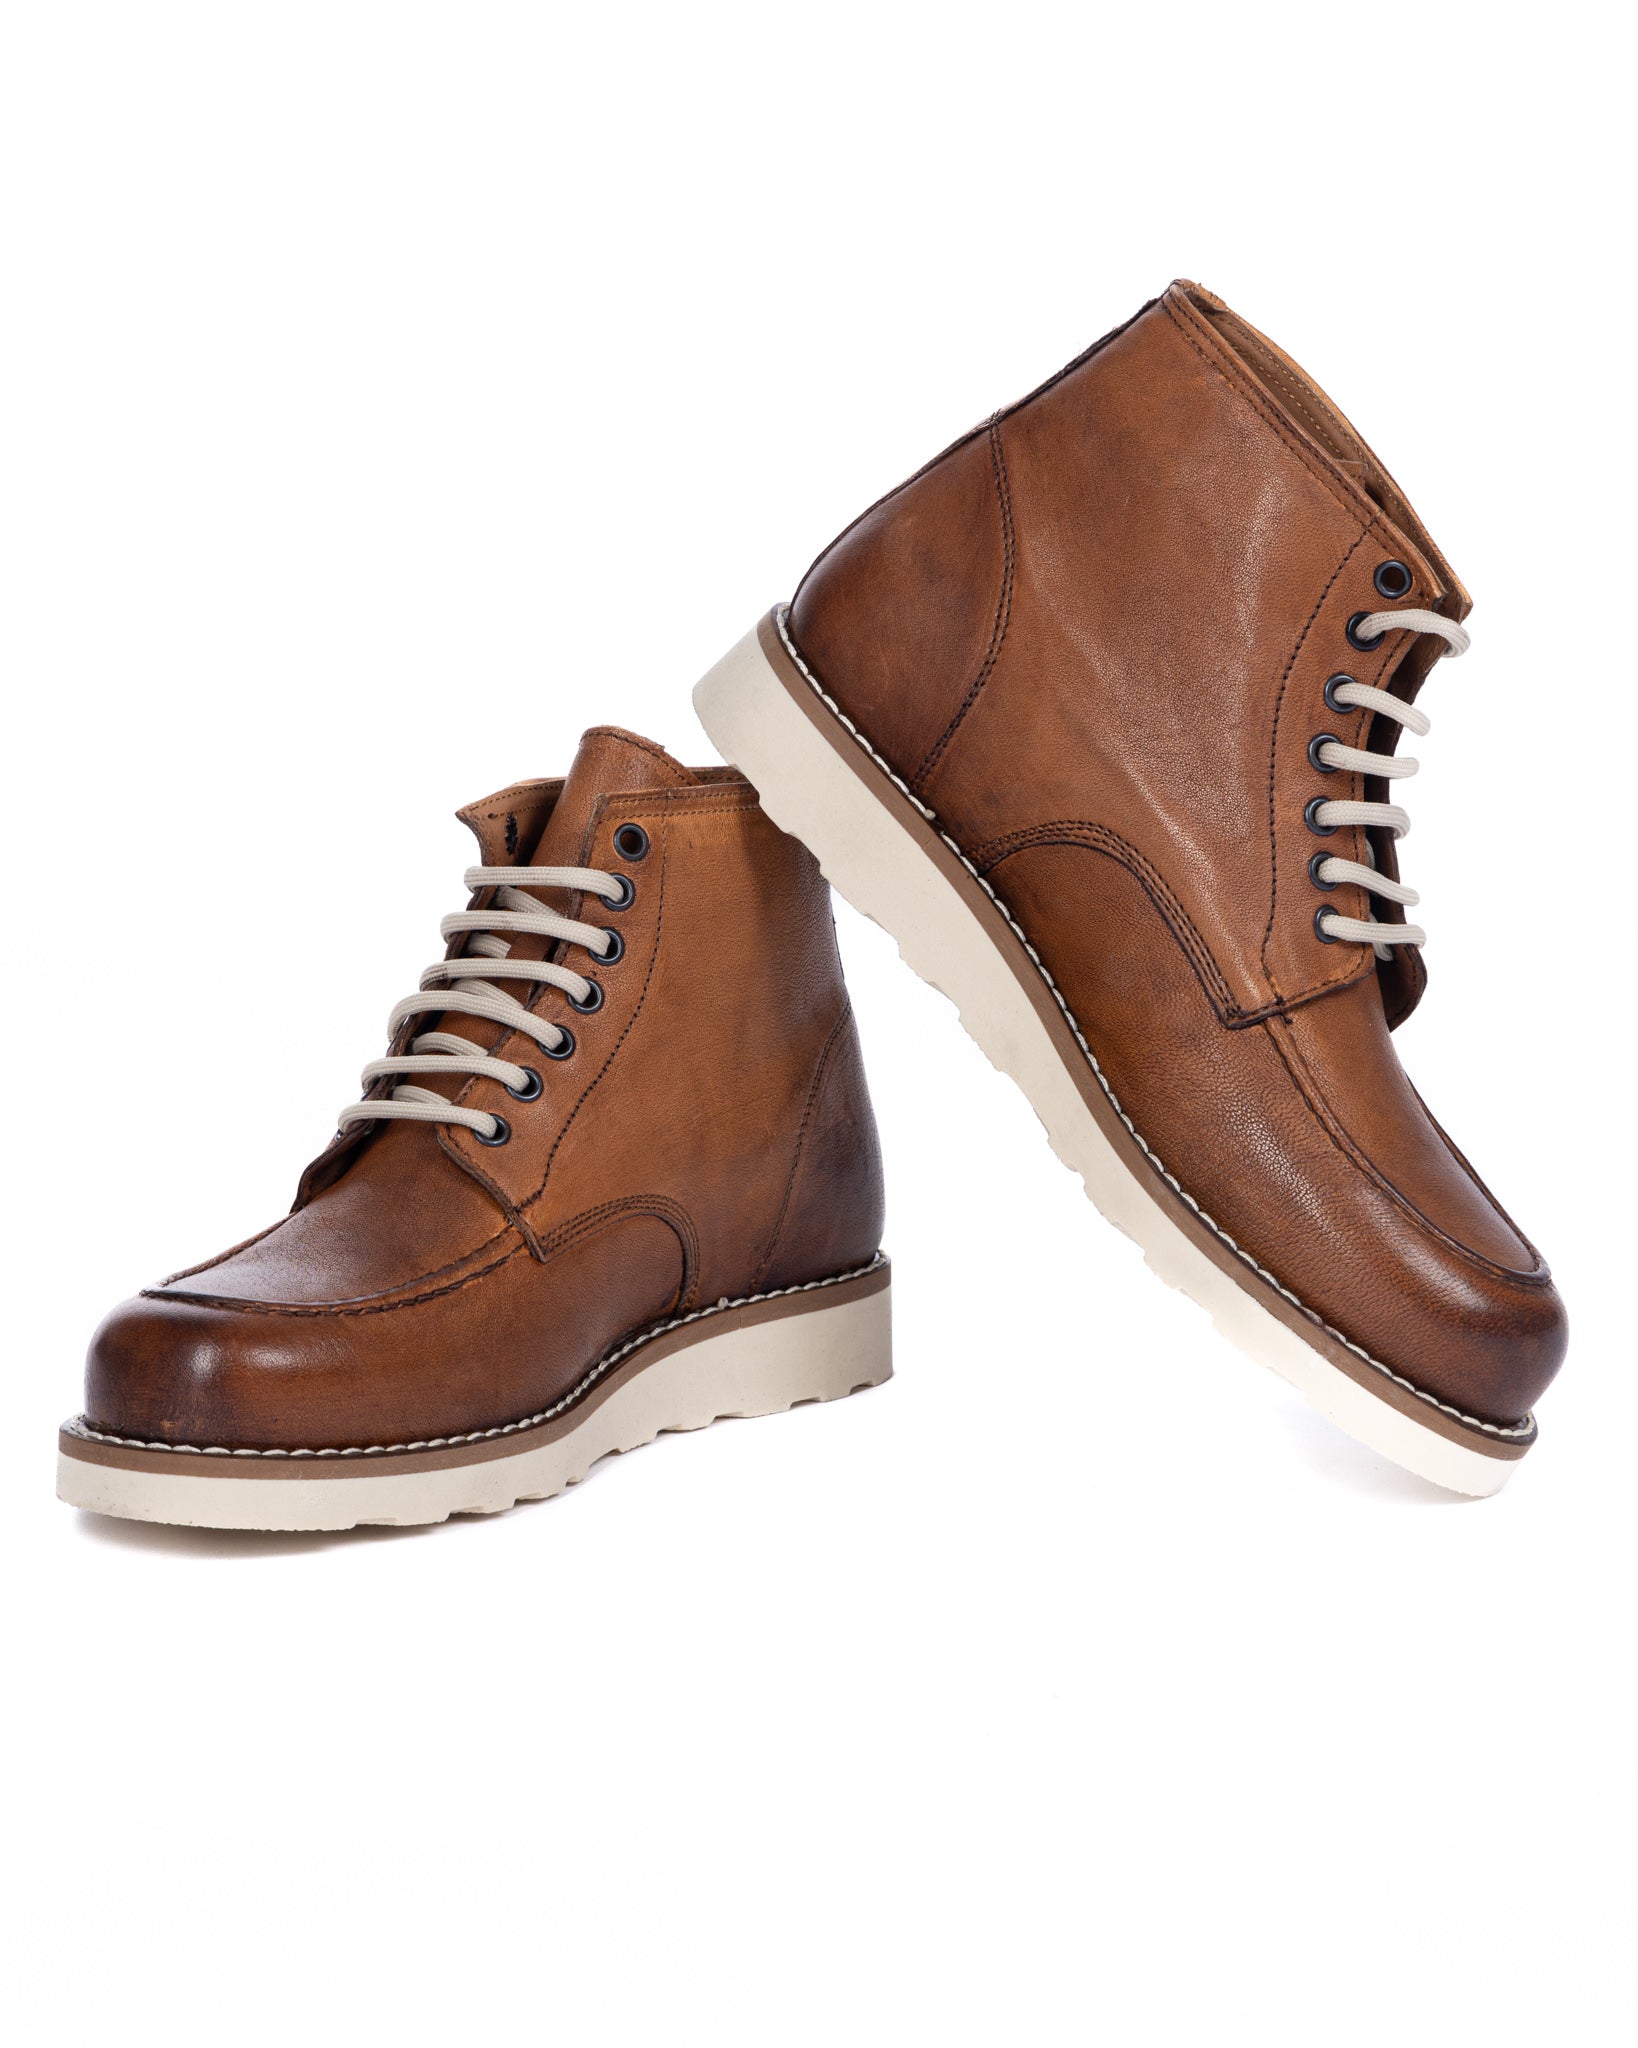 Moon - tan leather boot